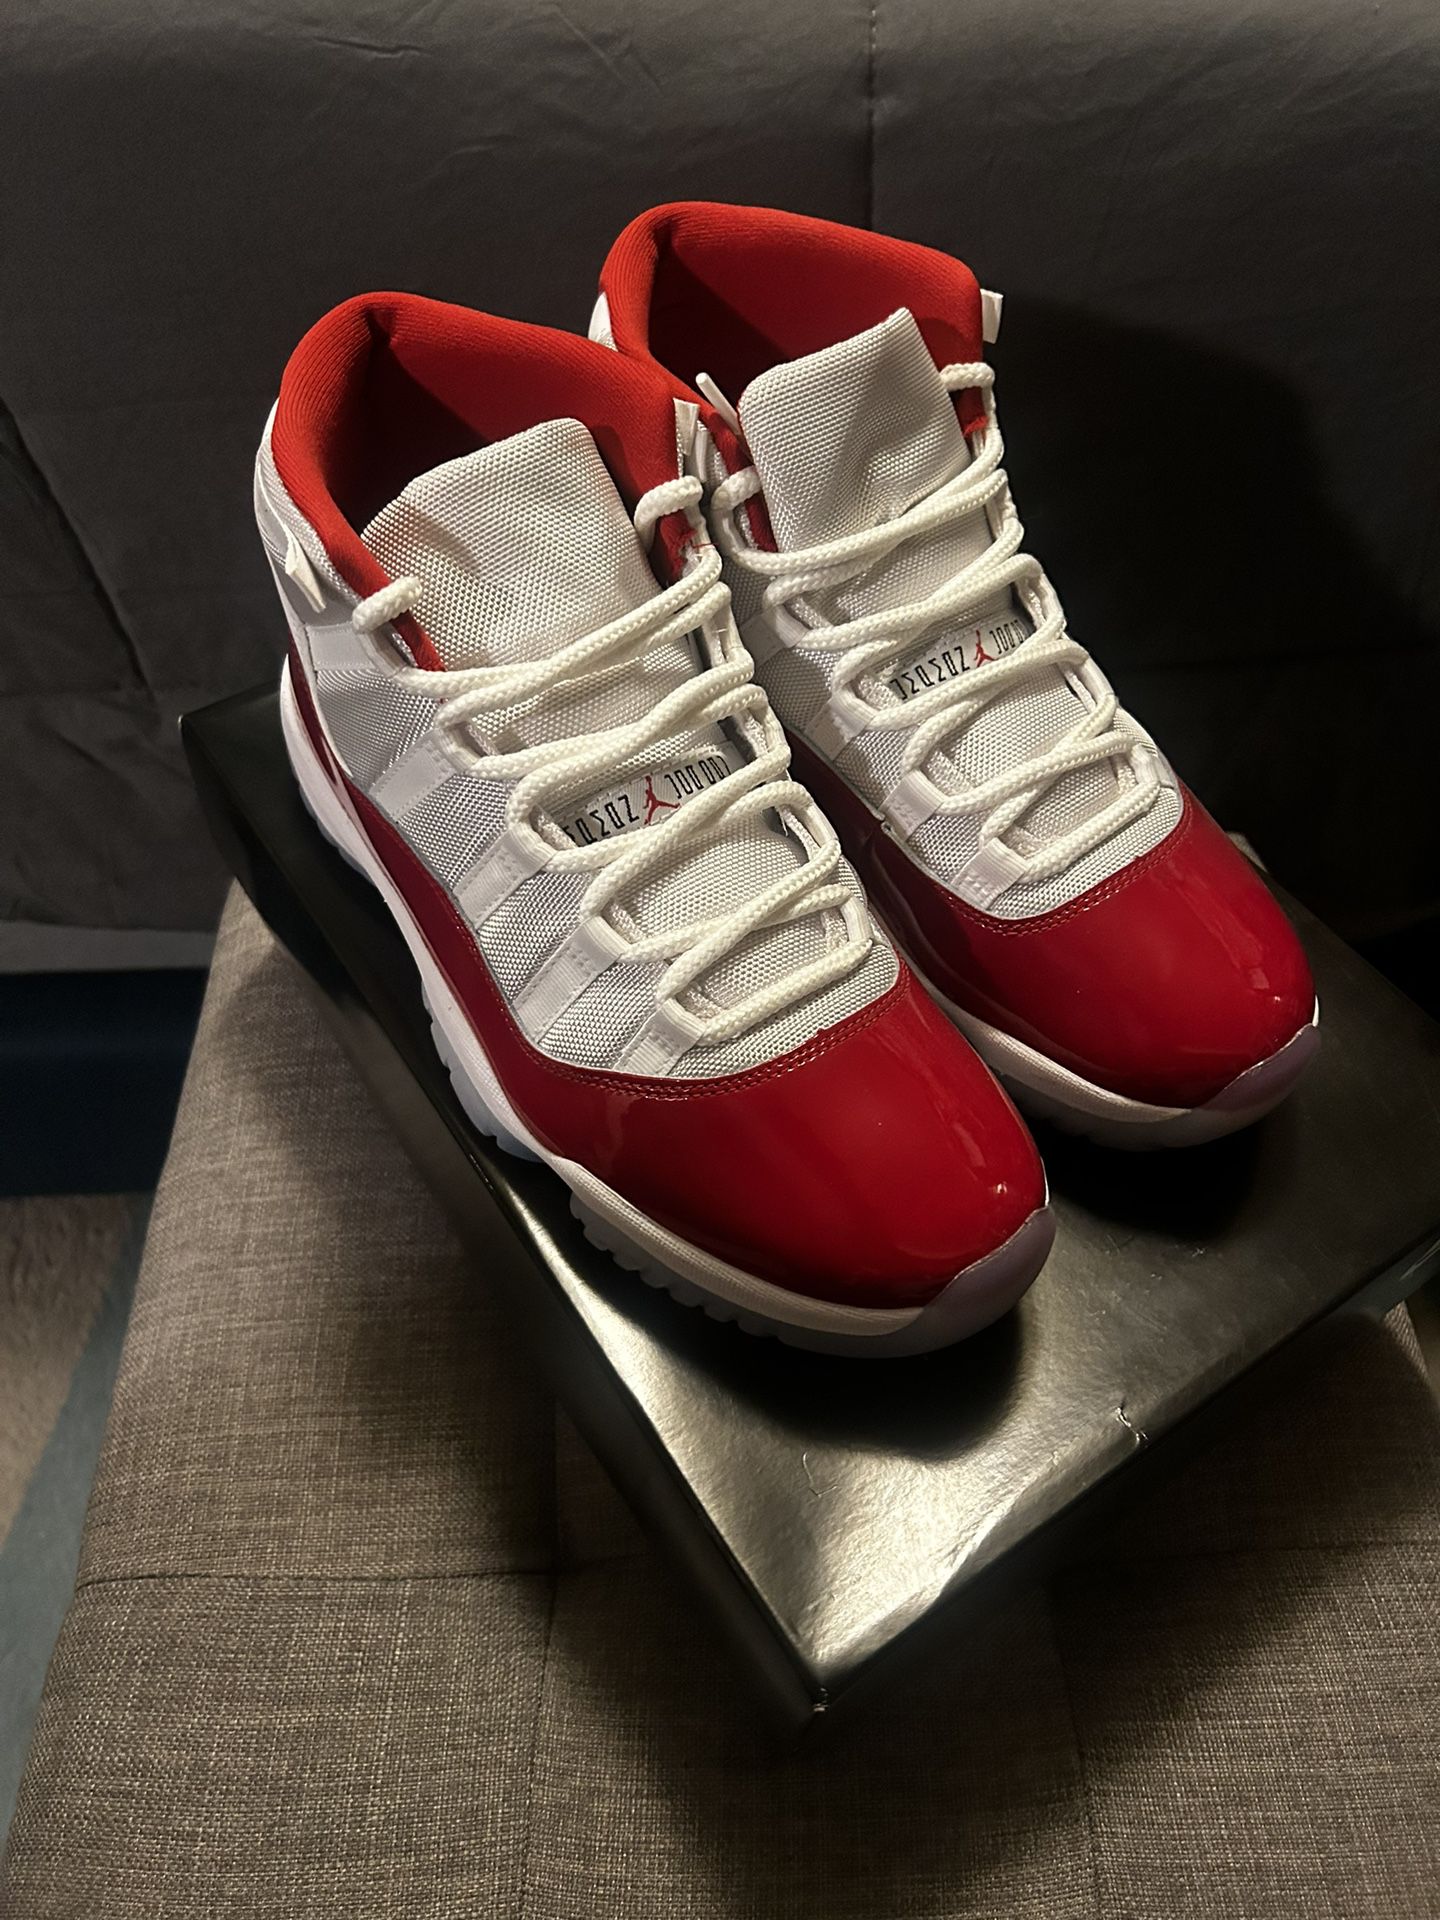 Air Jordan 11 Cherry Reds